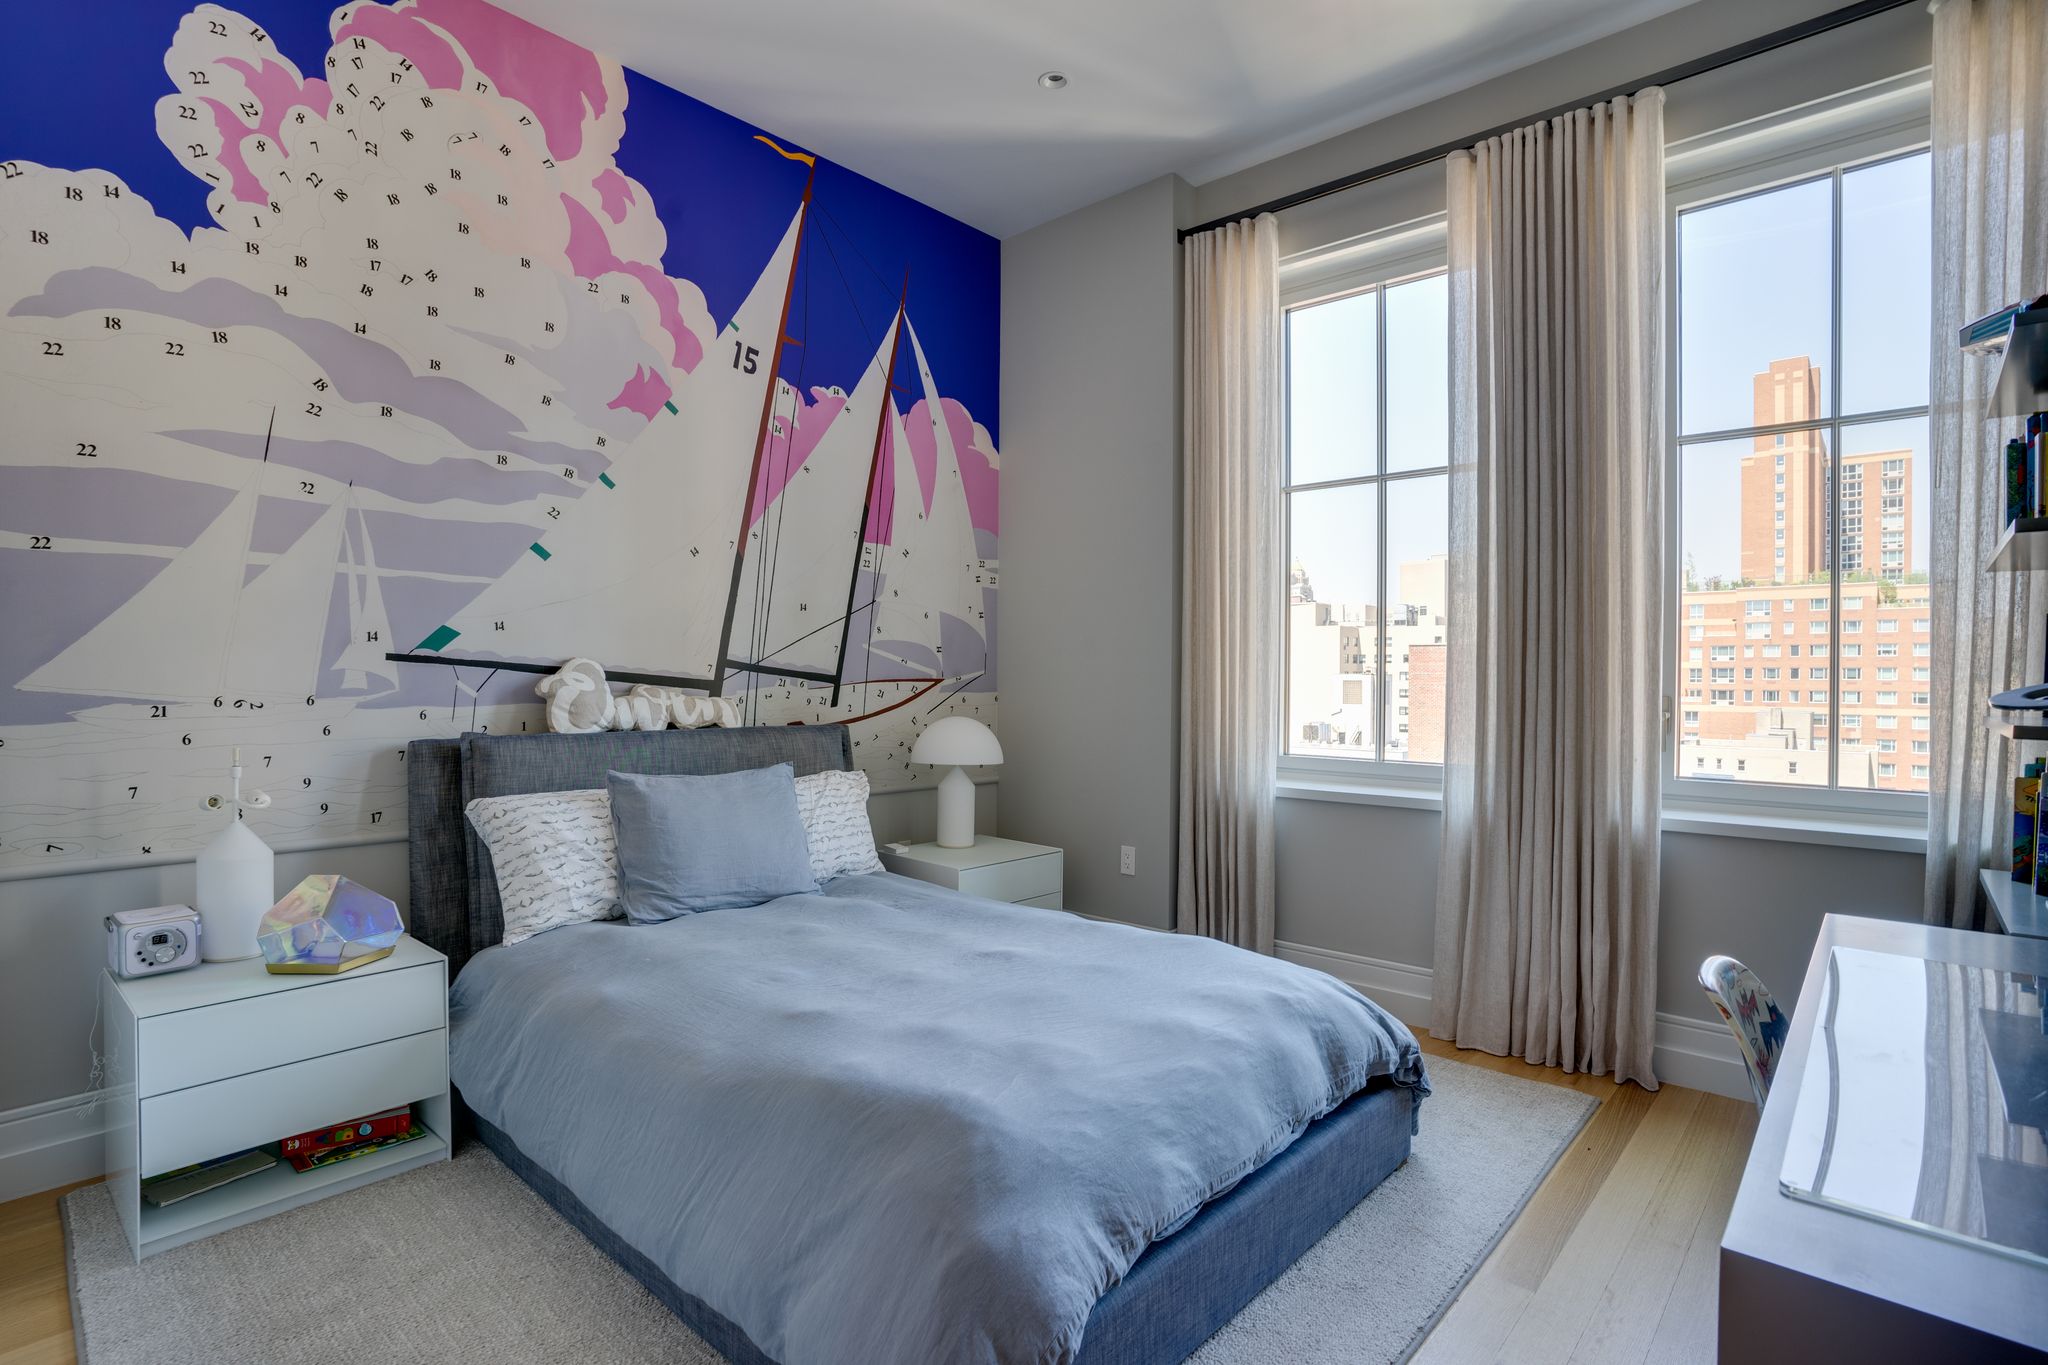 Kids Bedroom - Apartment Renovation | 301 East 80th, New York, NY